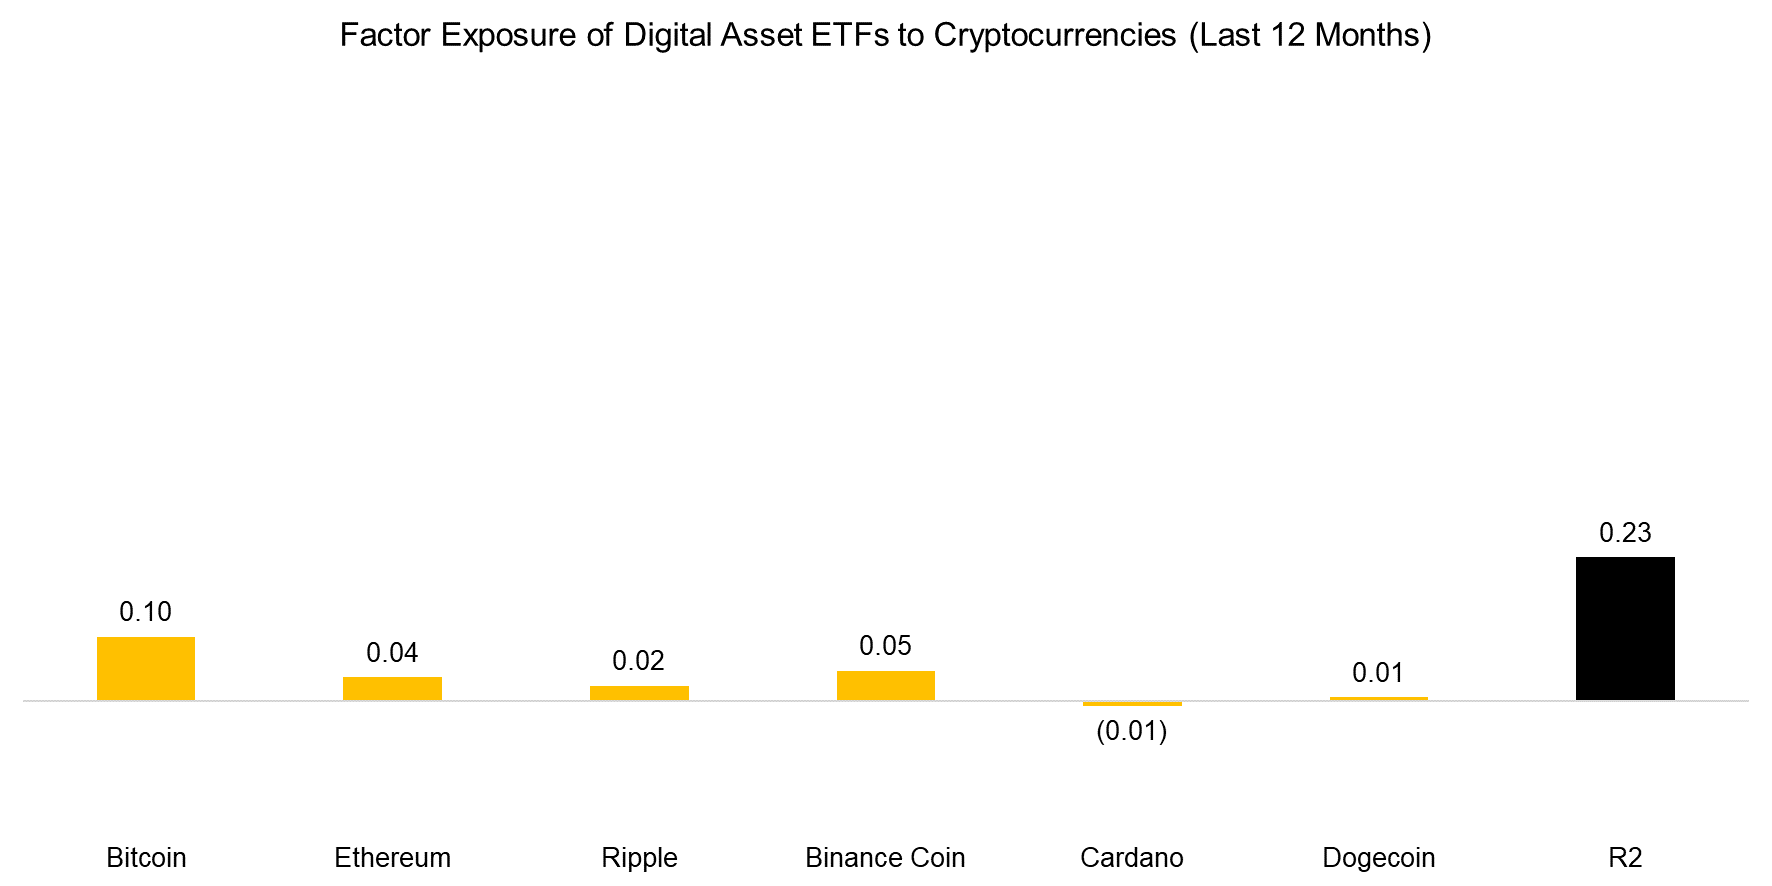 Factor Exposure of Digital Asset ETFs to Cryptocurrencies (Last 12 Months)